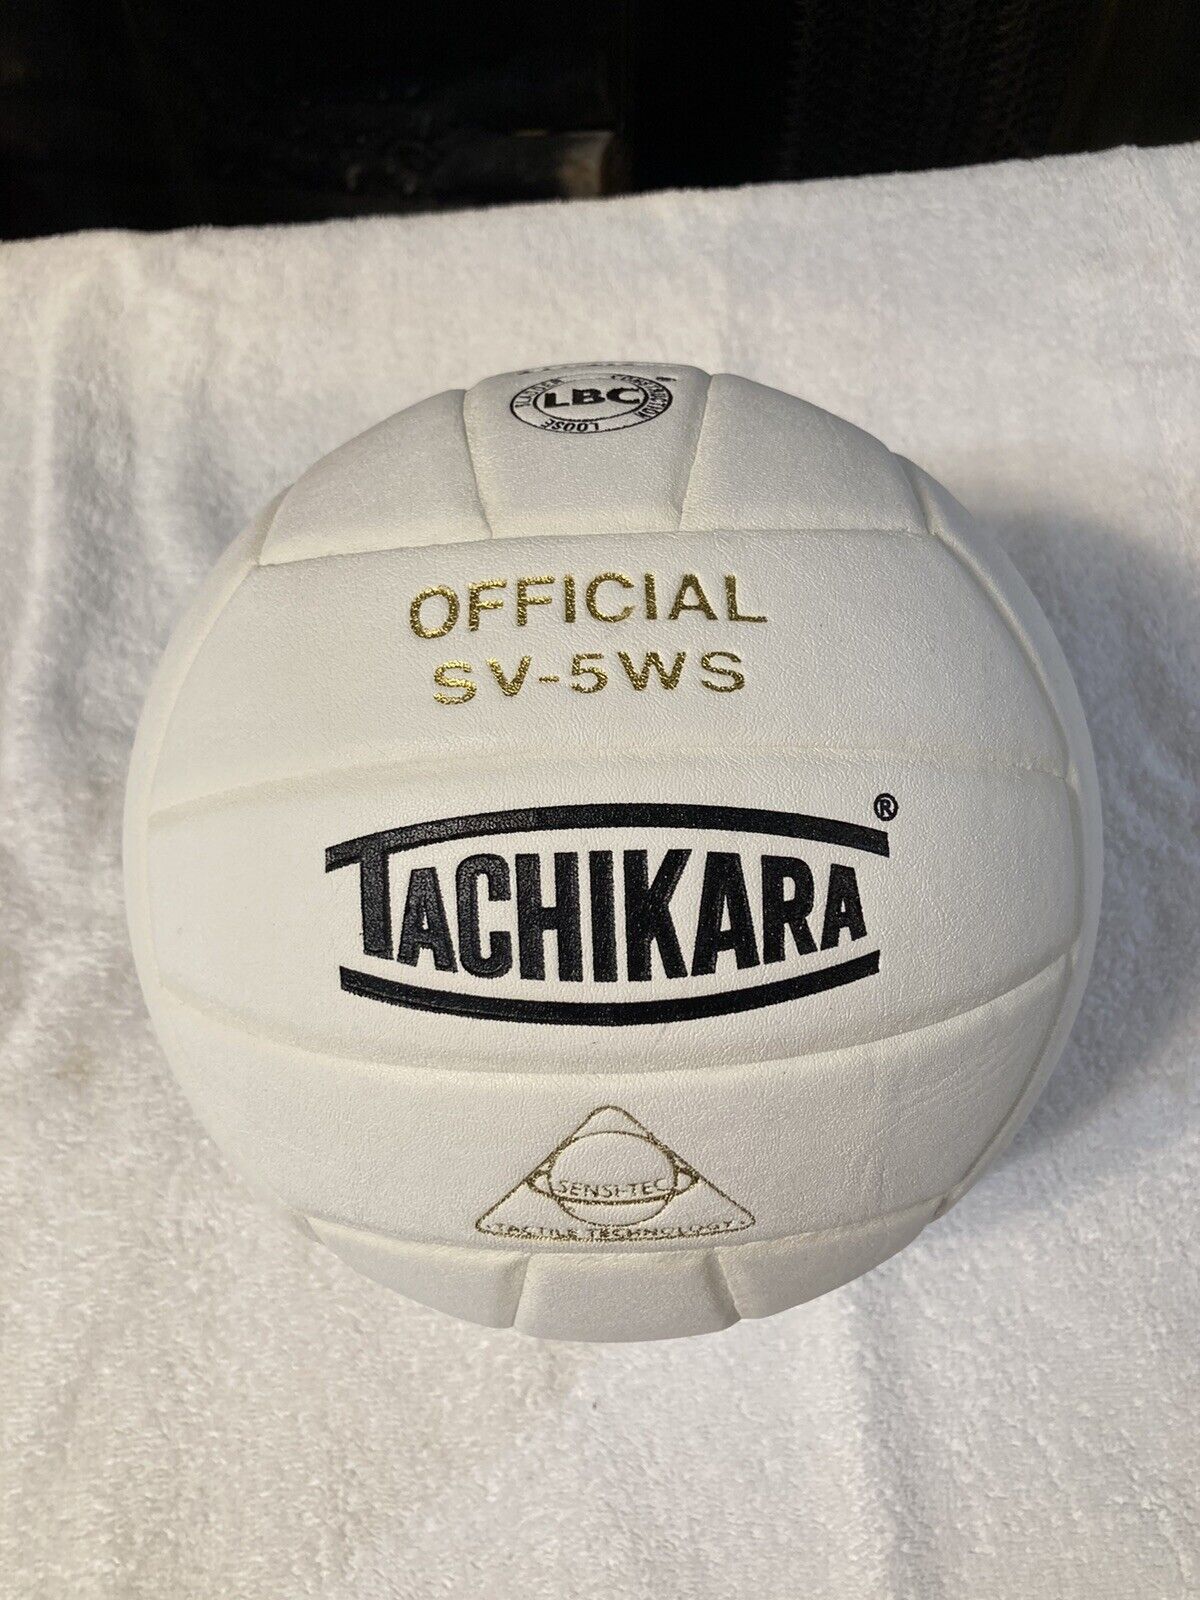 Tachikara Sv-5ws Composite Ncaa Volleyball (new But Has Storage Wear)